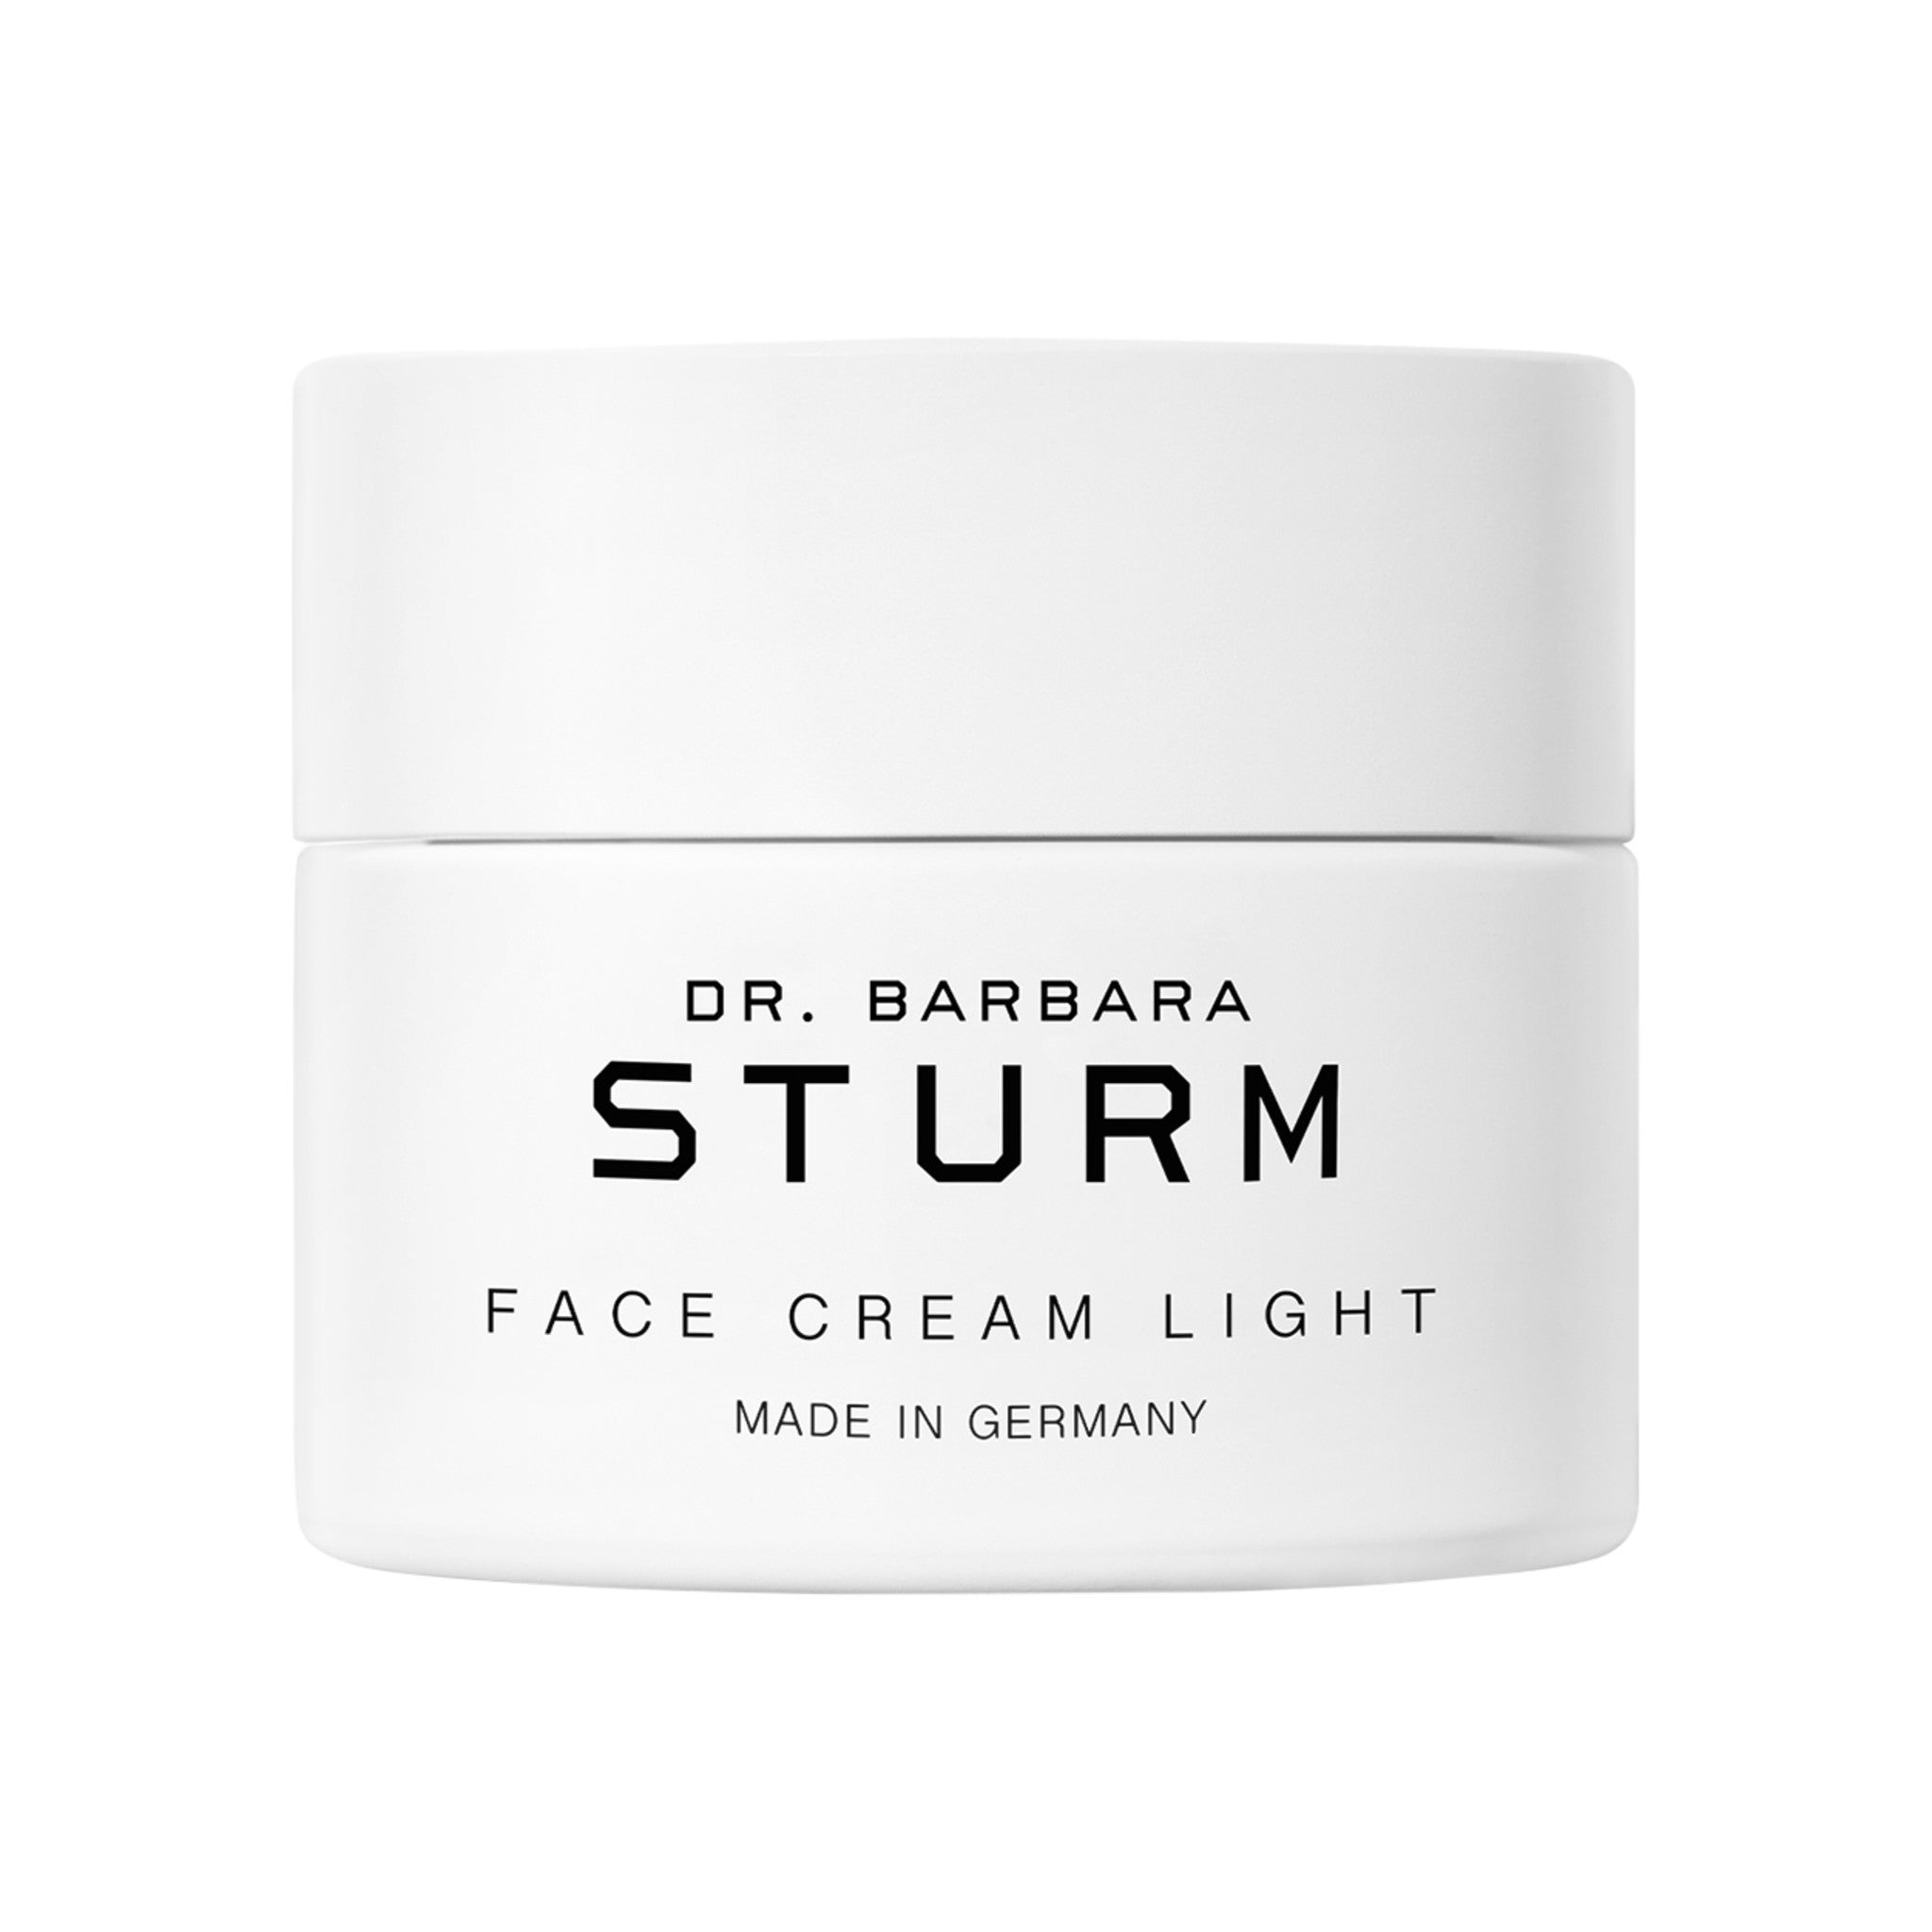 Dr. Barbara Sturm Face Cream Light main image.